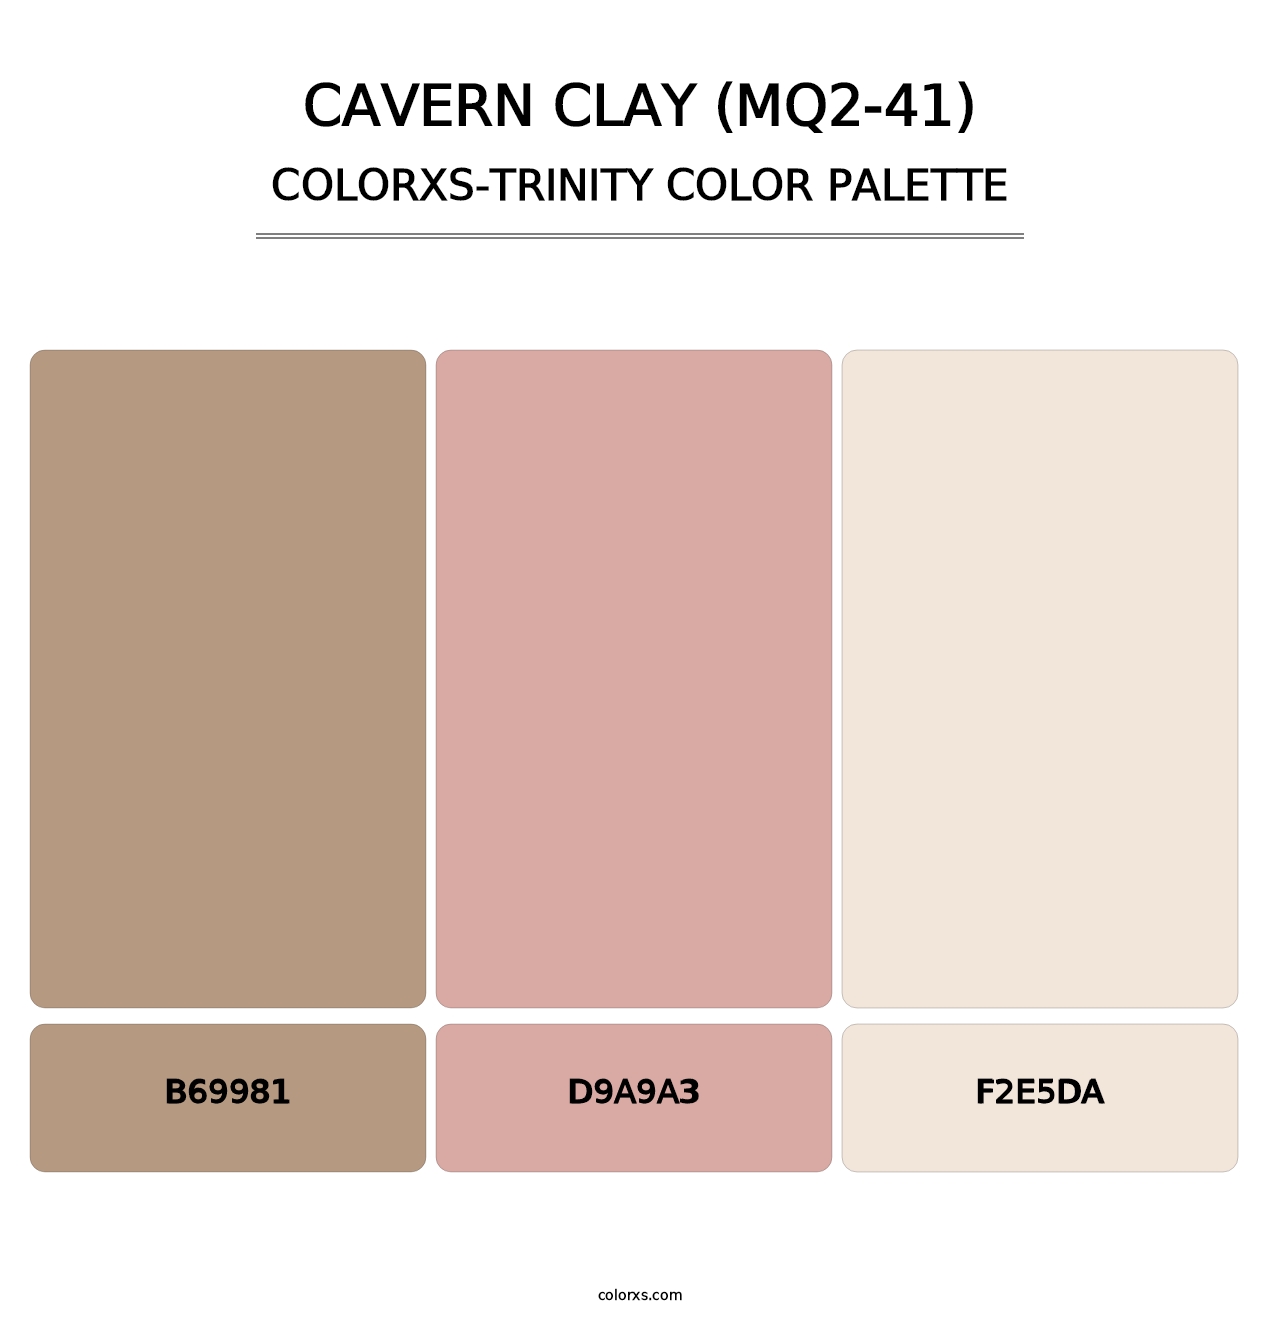 Cavern Clay (MQ2-41) - Colorxs Trinity Palette